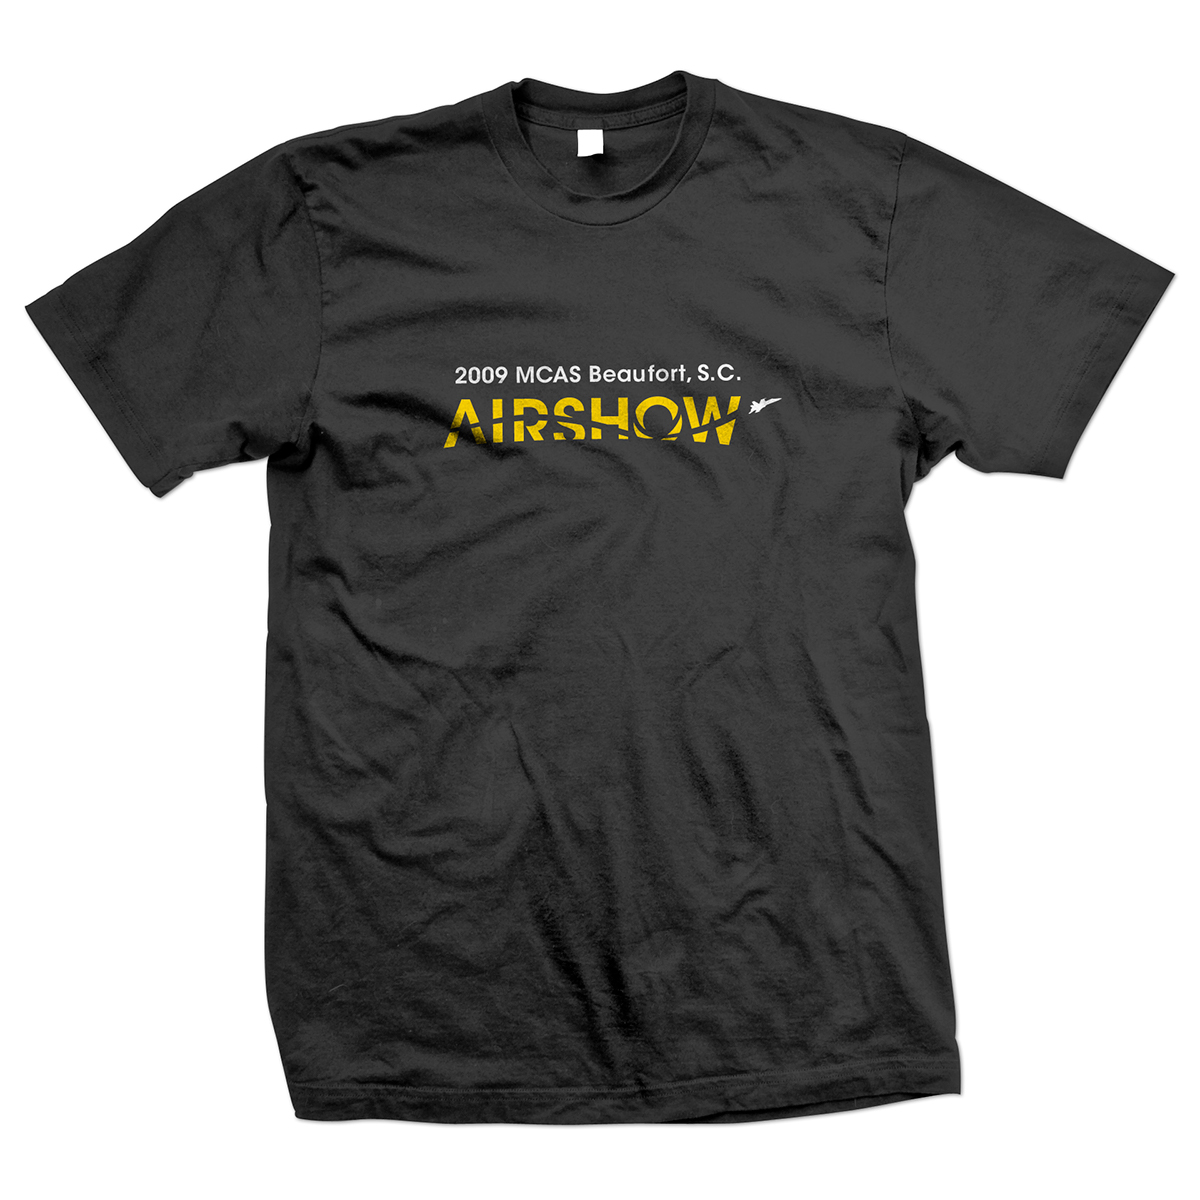 airshow logo